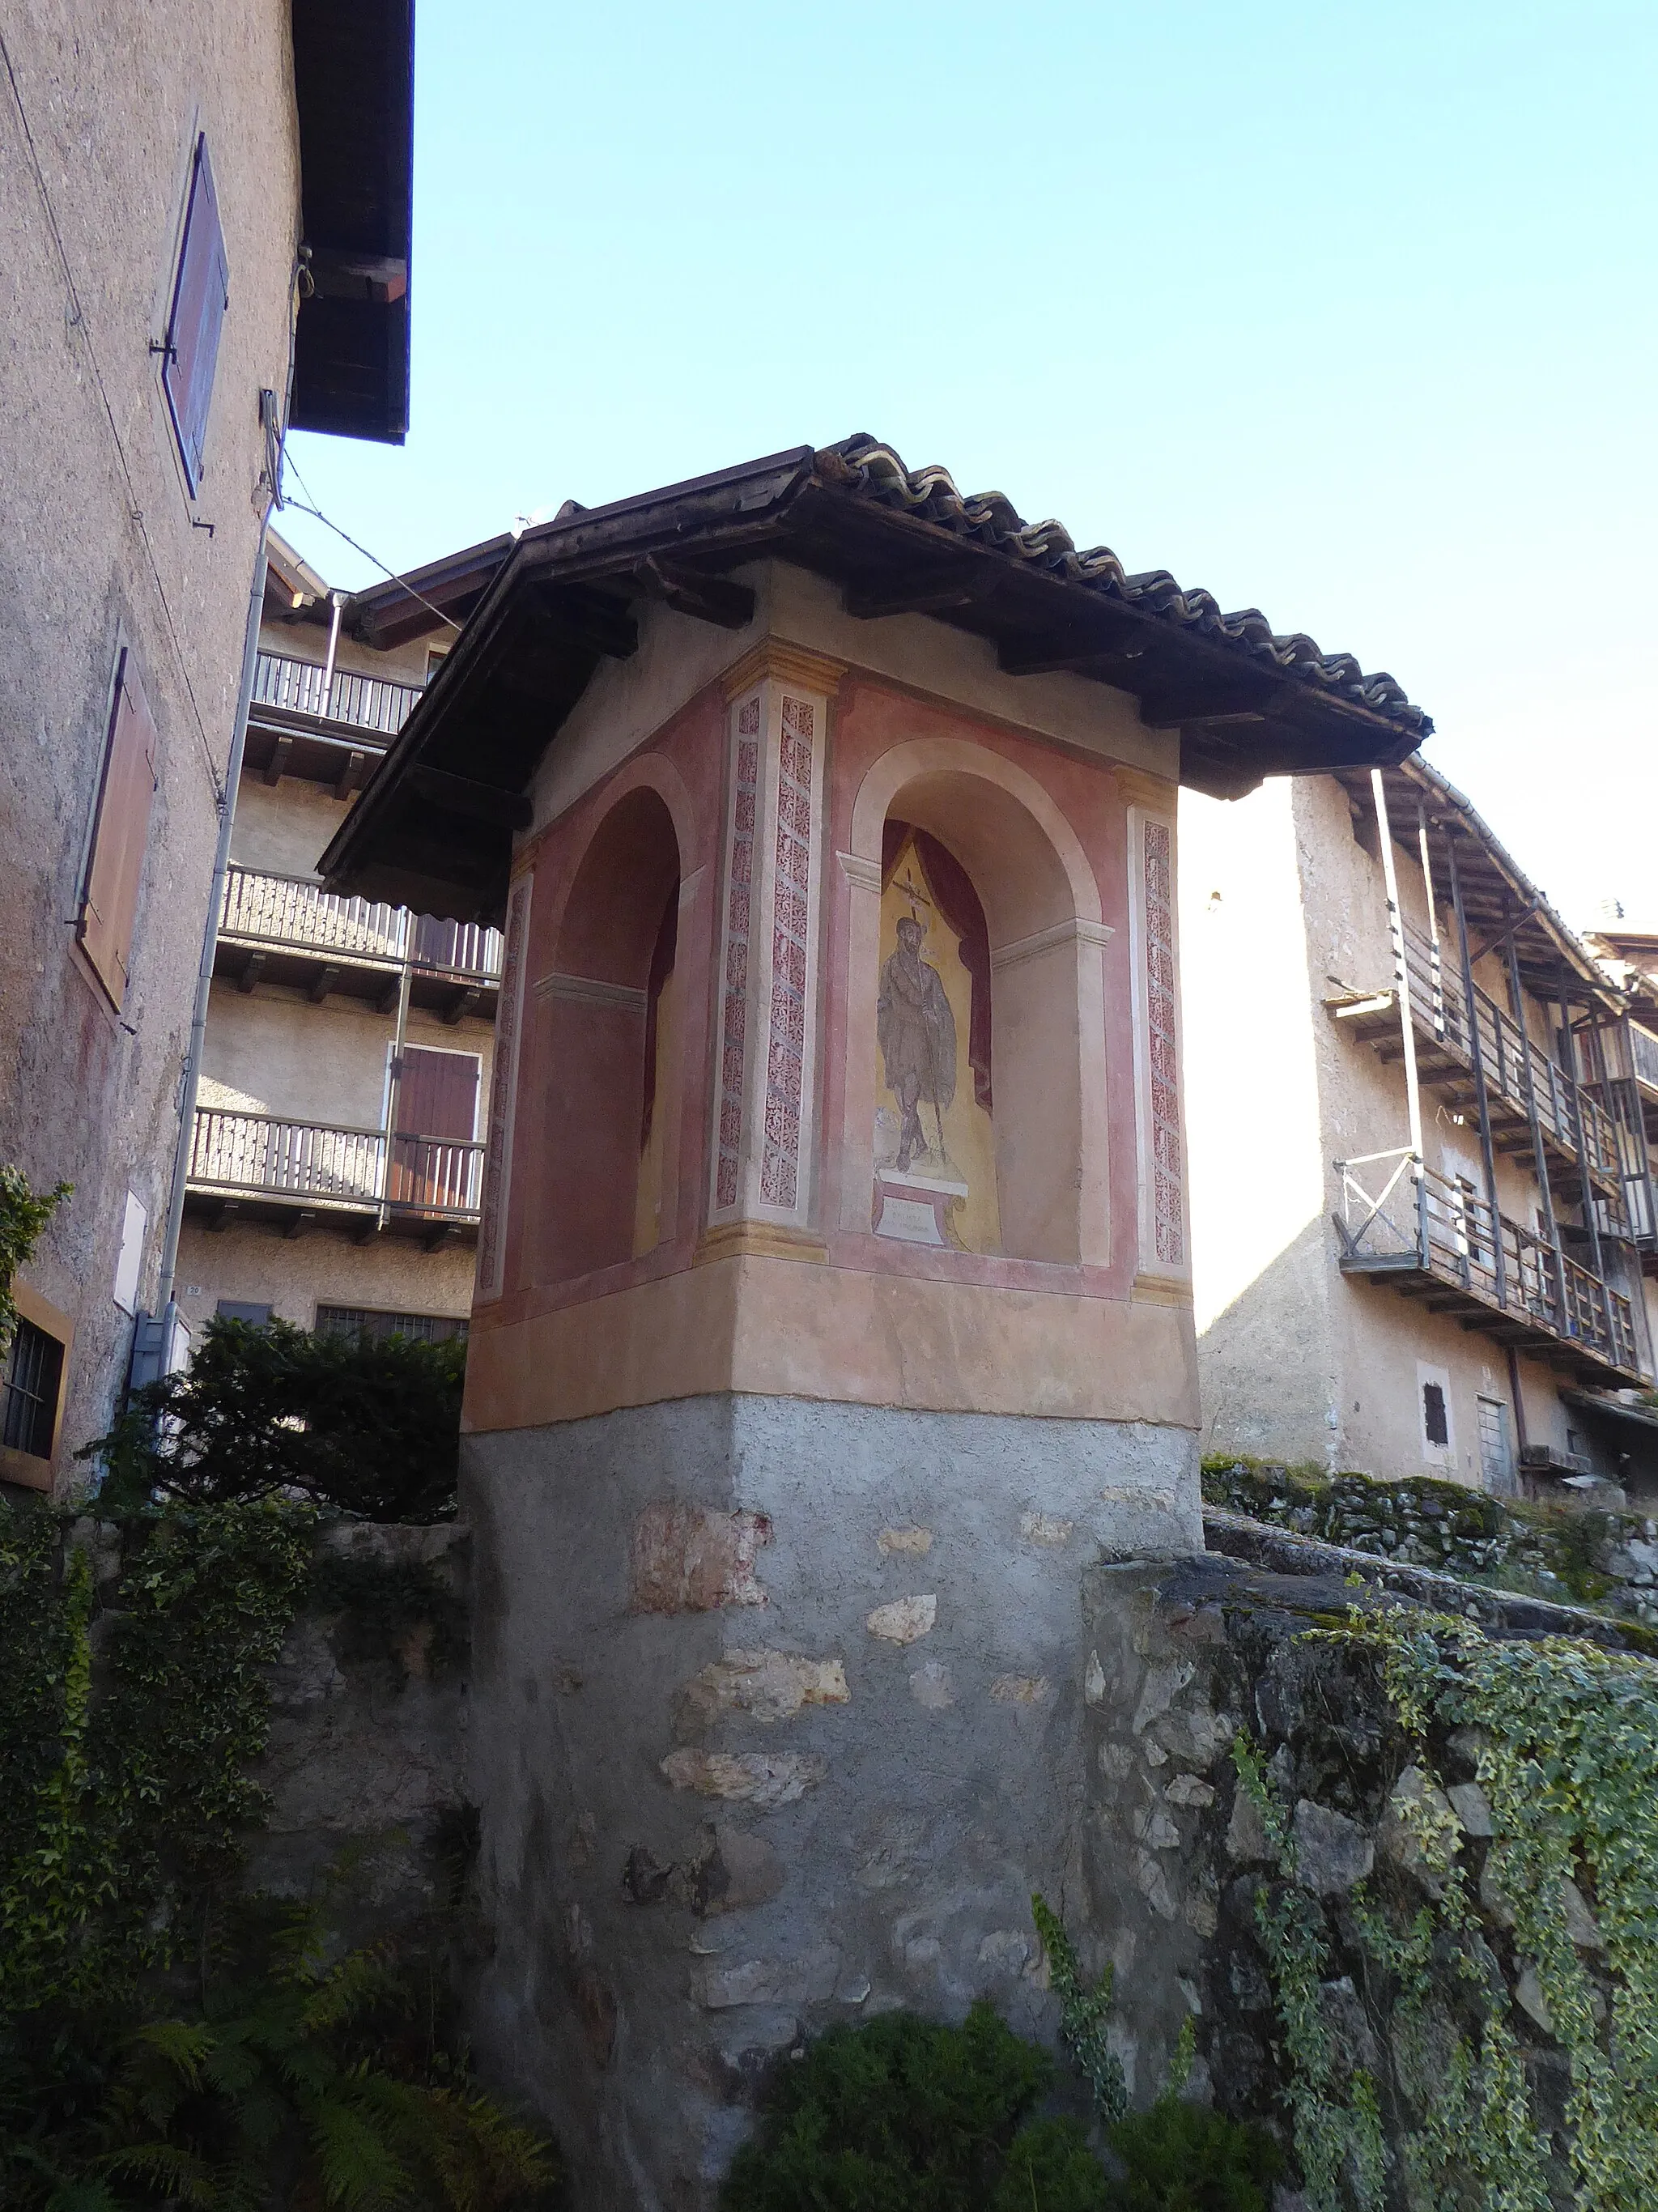 Photo showing: Aste (Vallarsa, Trentino, Italy), wayside shrine